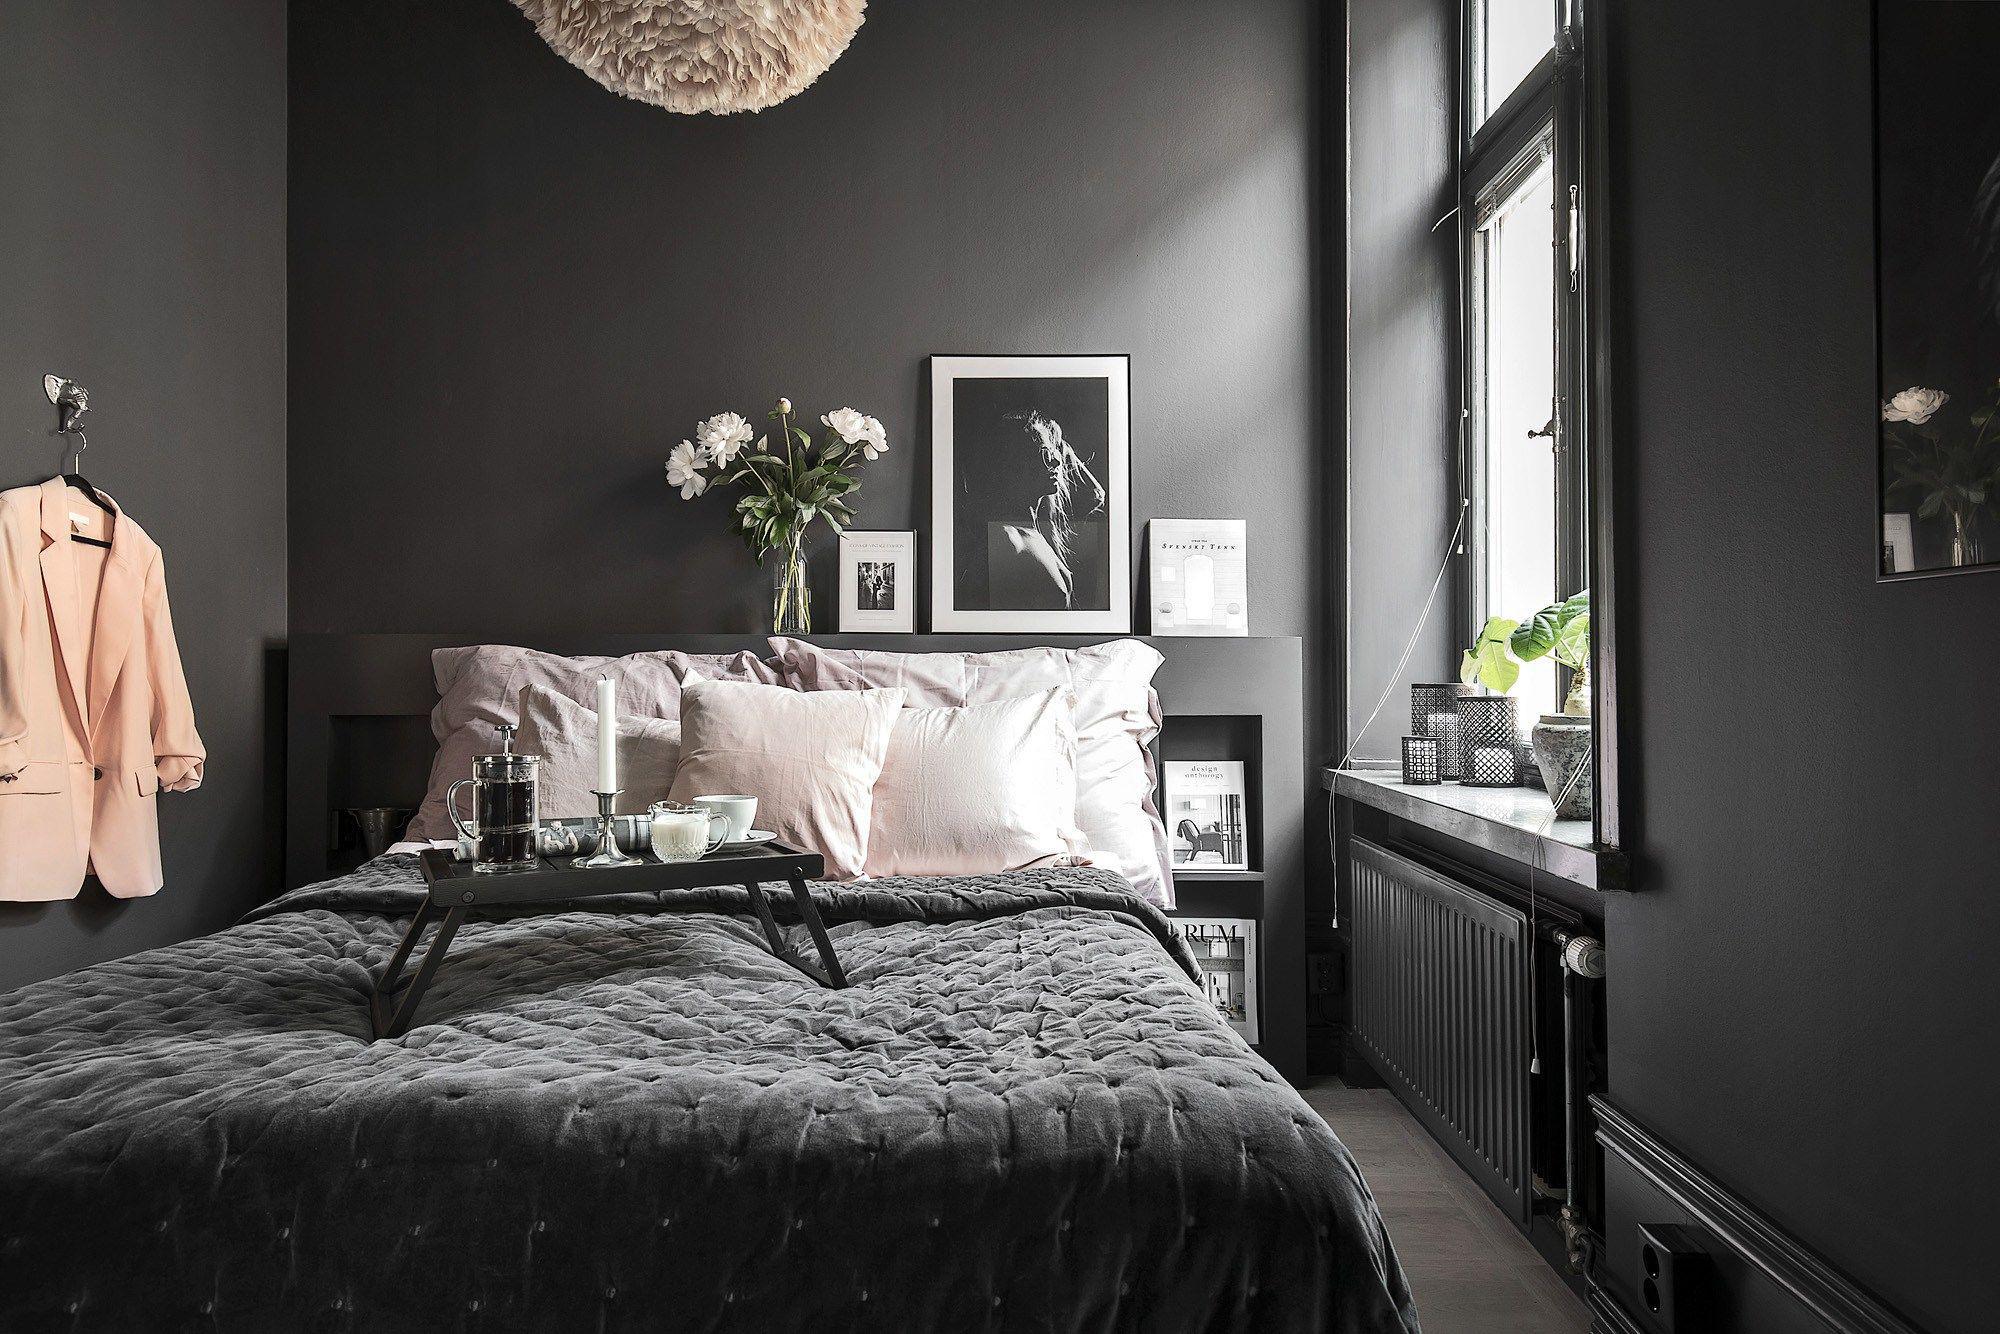 Black And Gray Bedroom Ideas